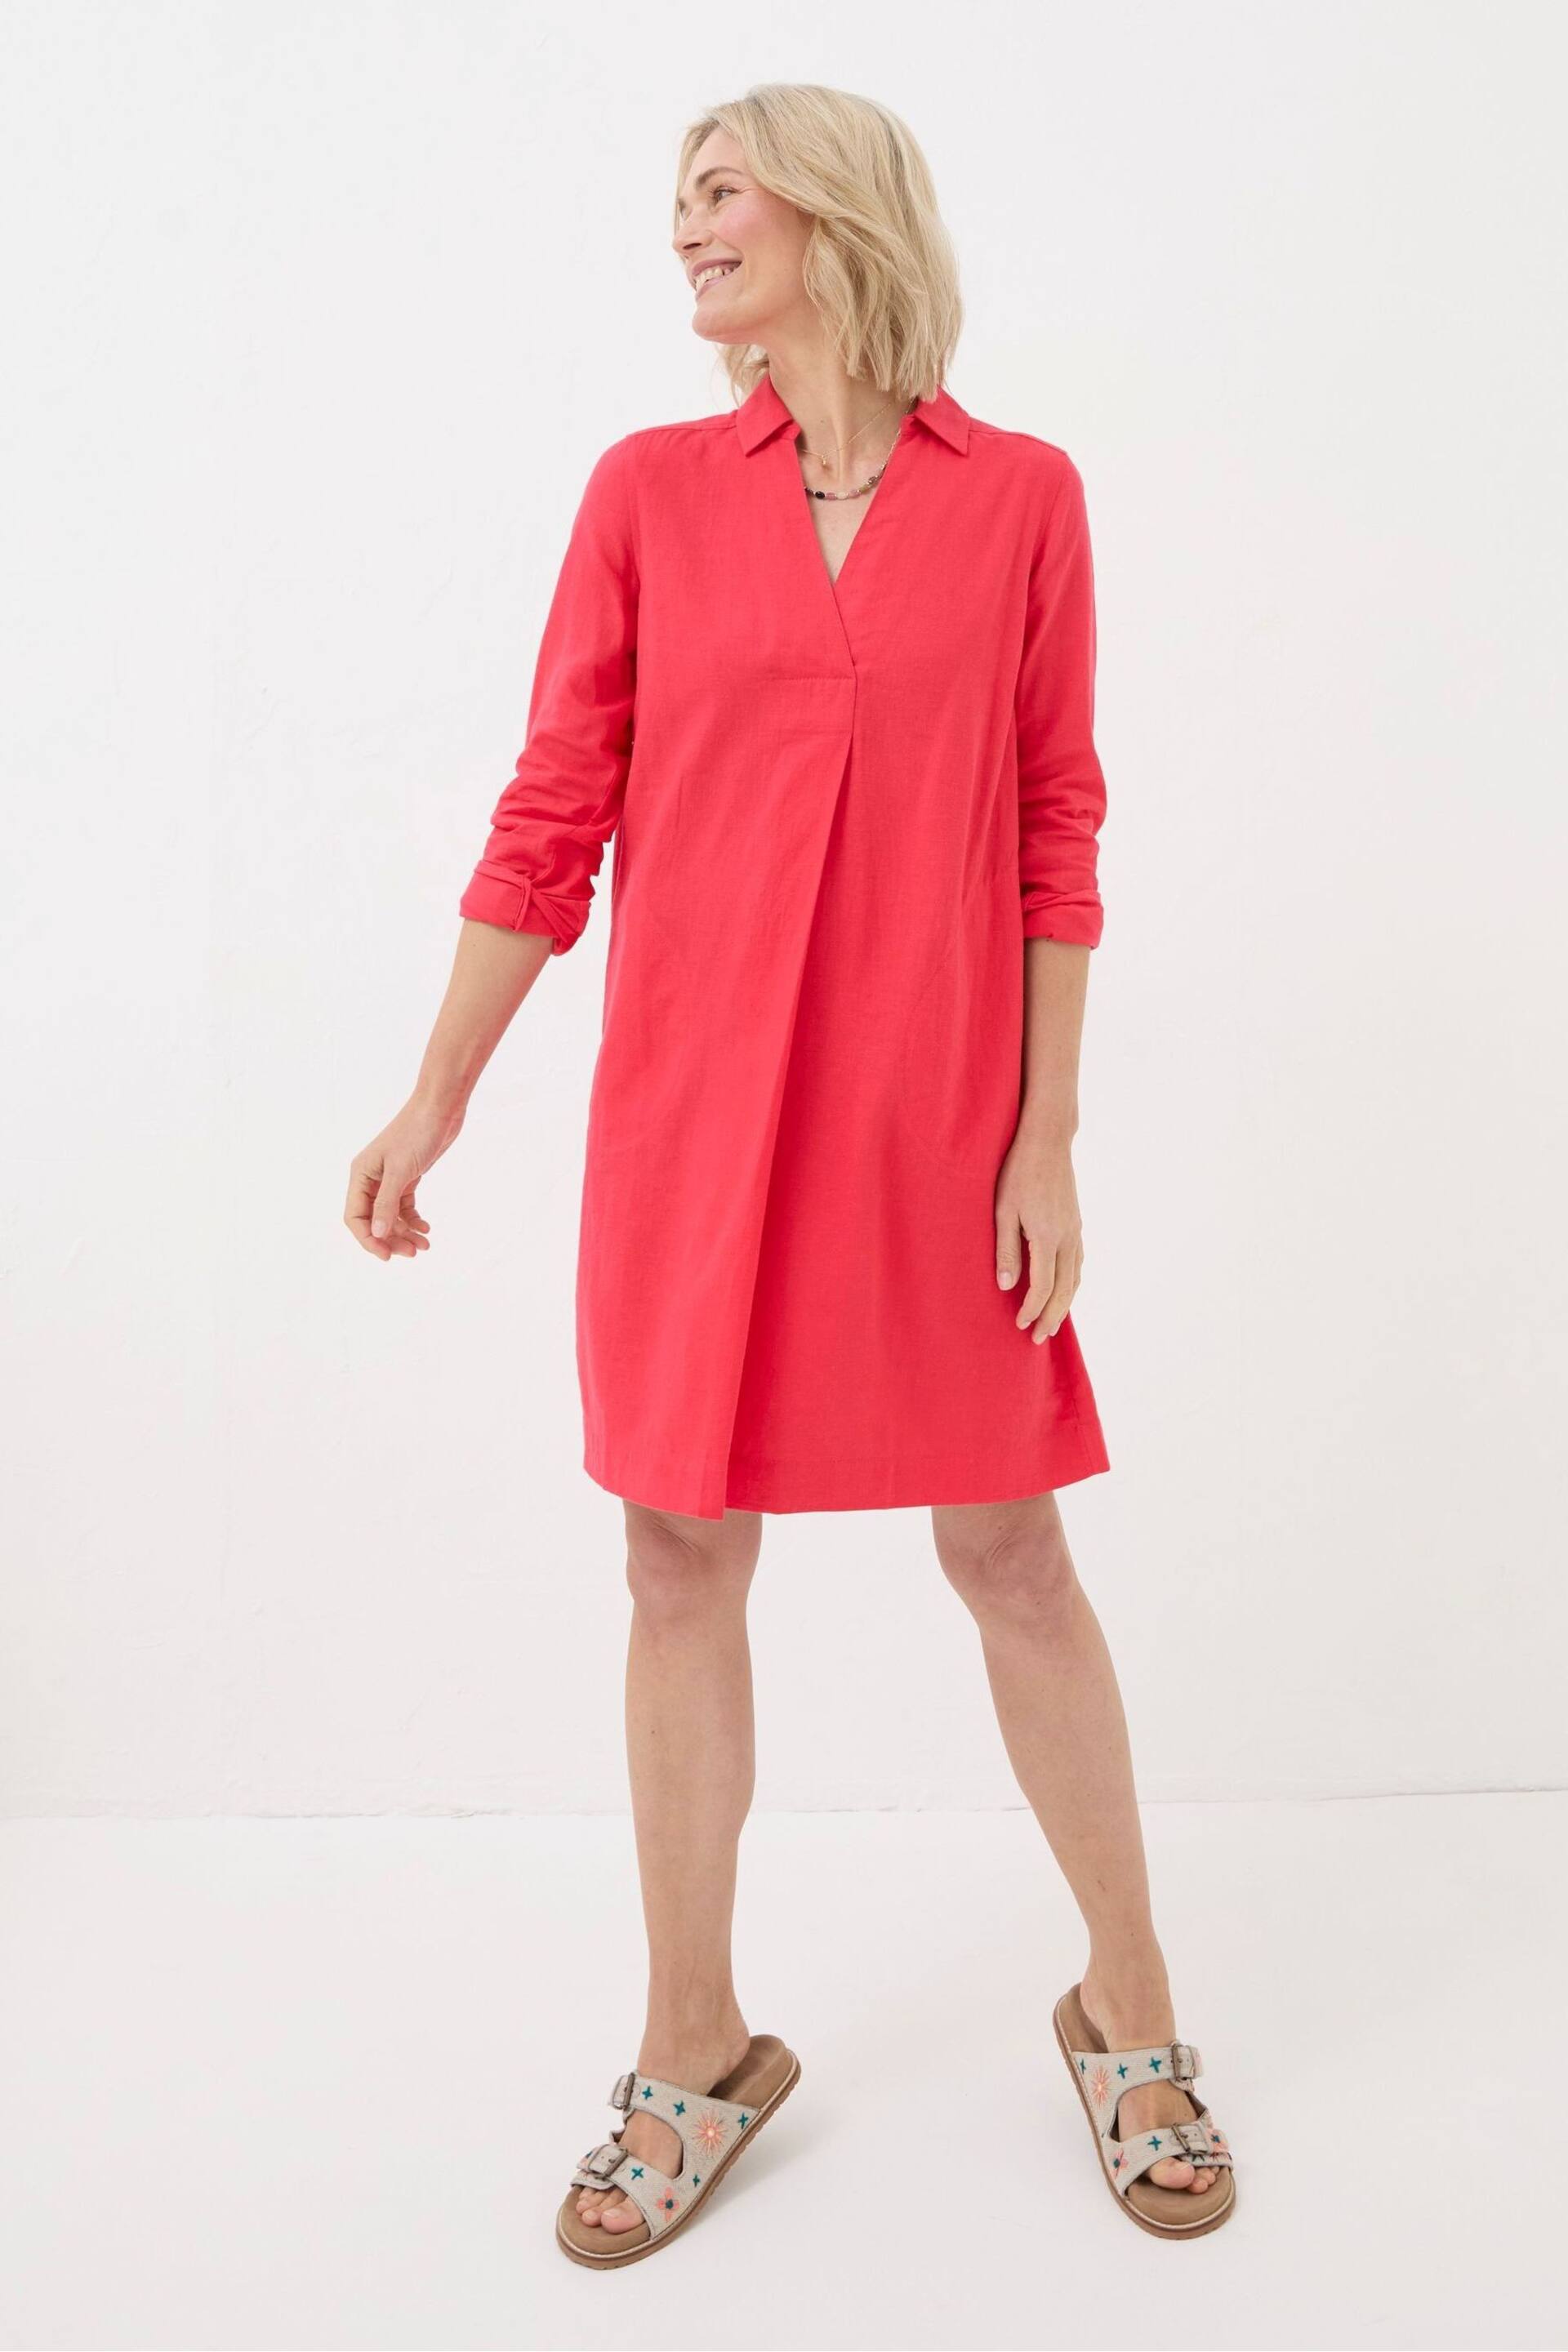 FatFace Red Linen Blend Tunic Dress - Image 1 of 4